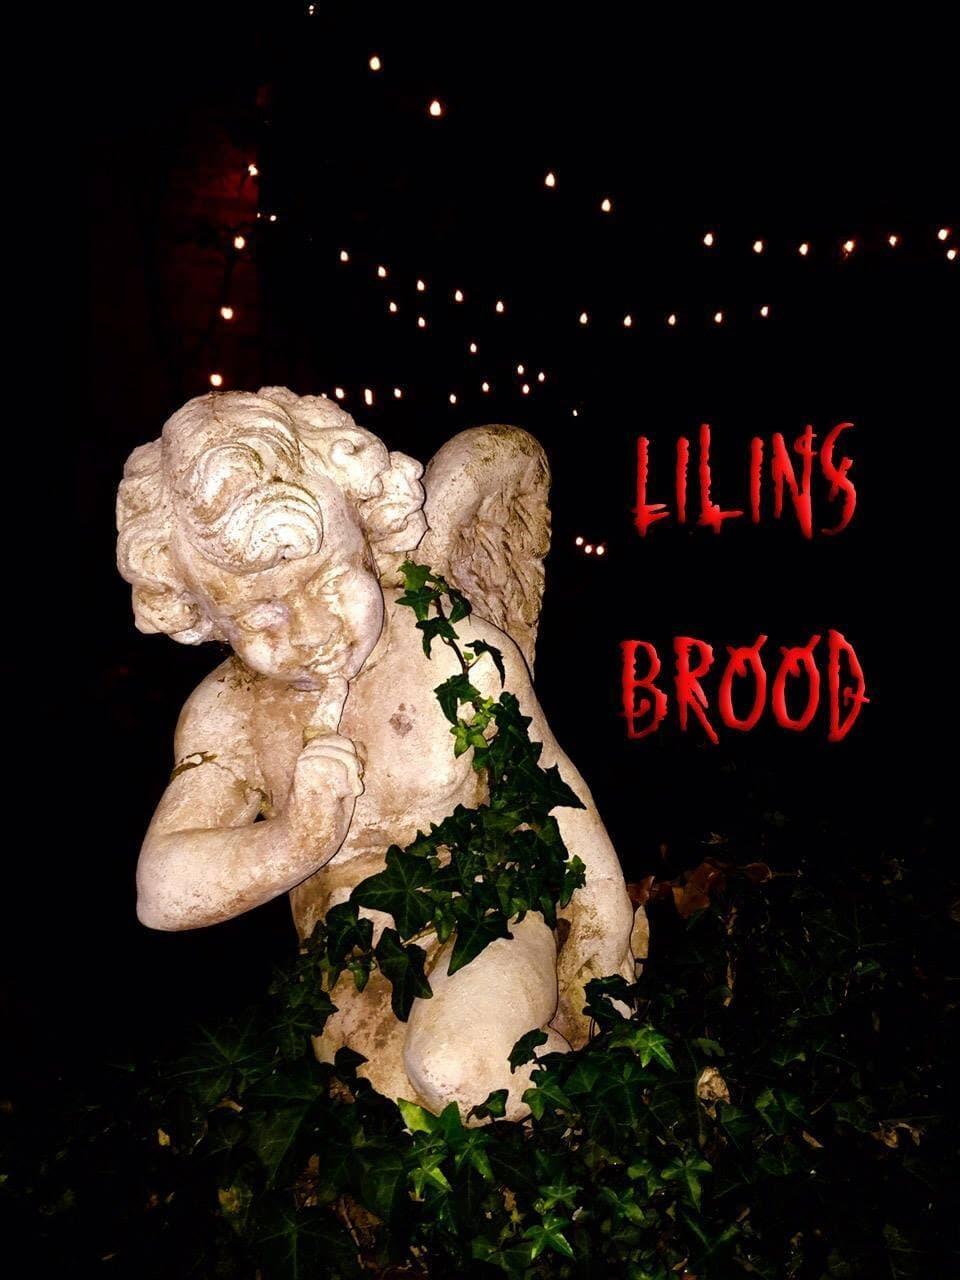 Lilin's Brood poster